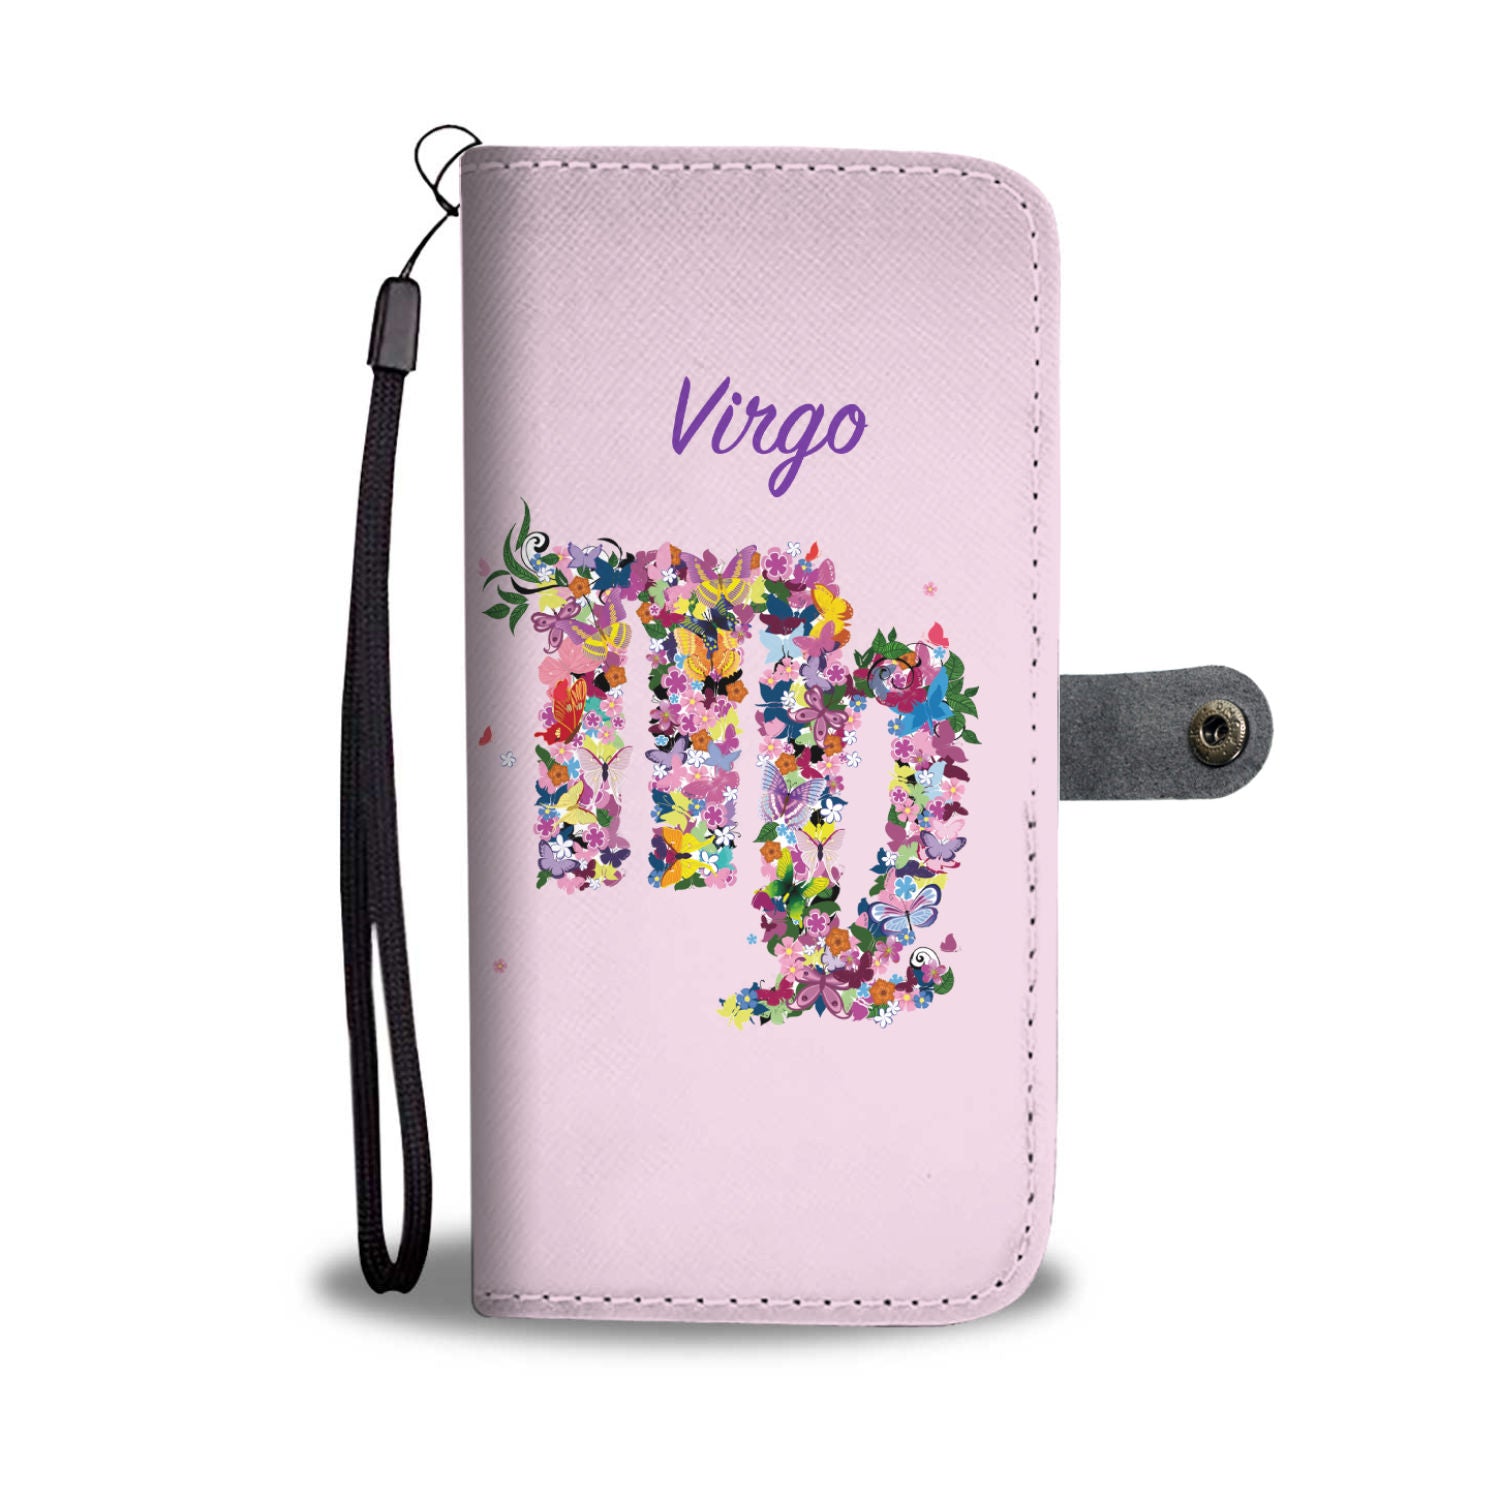 Virgo Floral Phone Wallet